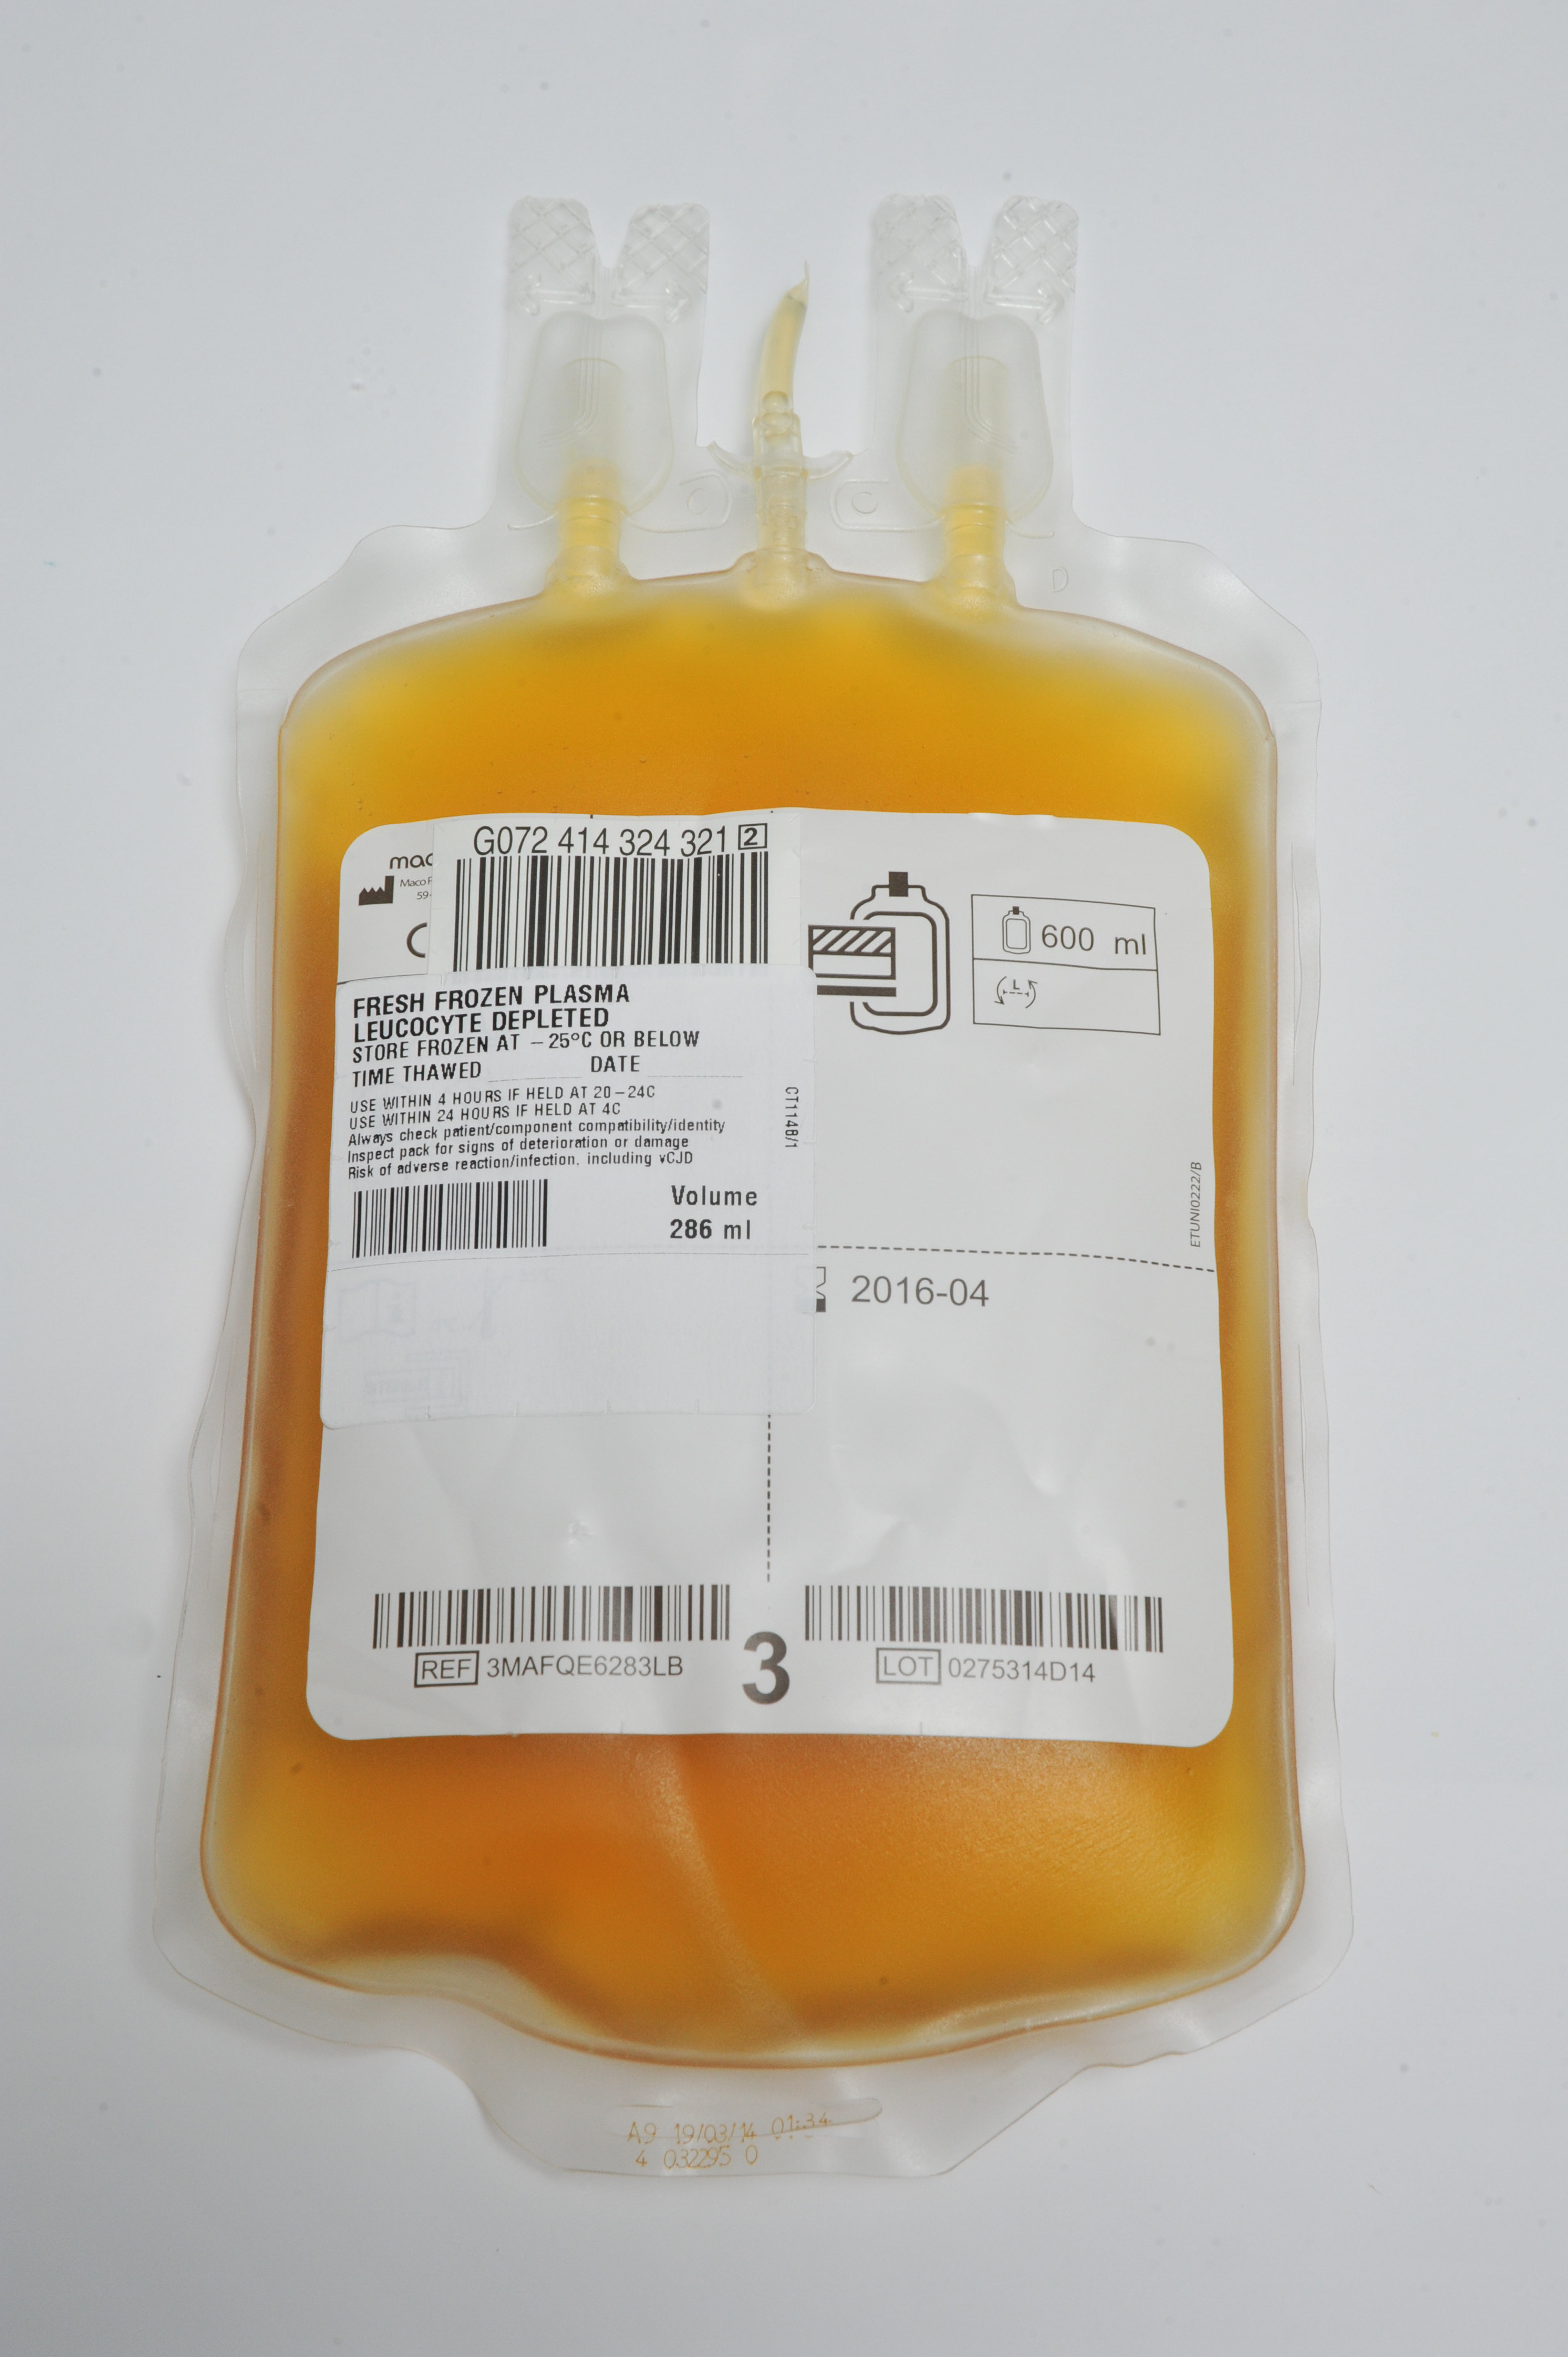 UK Plasma Ban Lifted - NHS Blood and Transplant